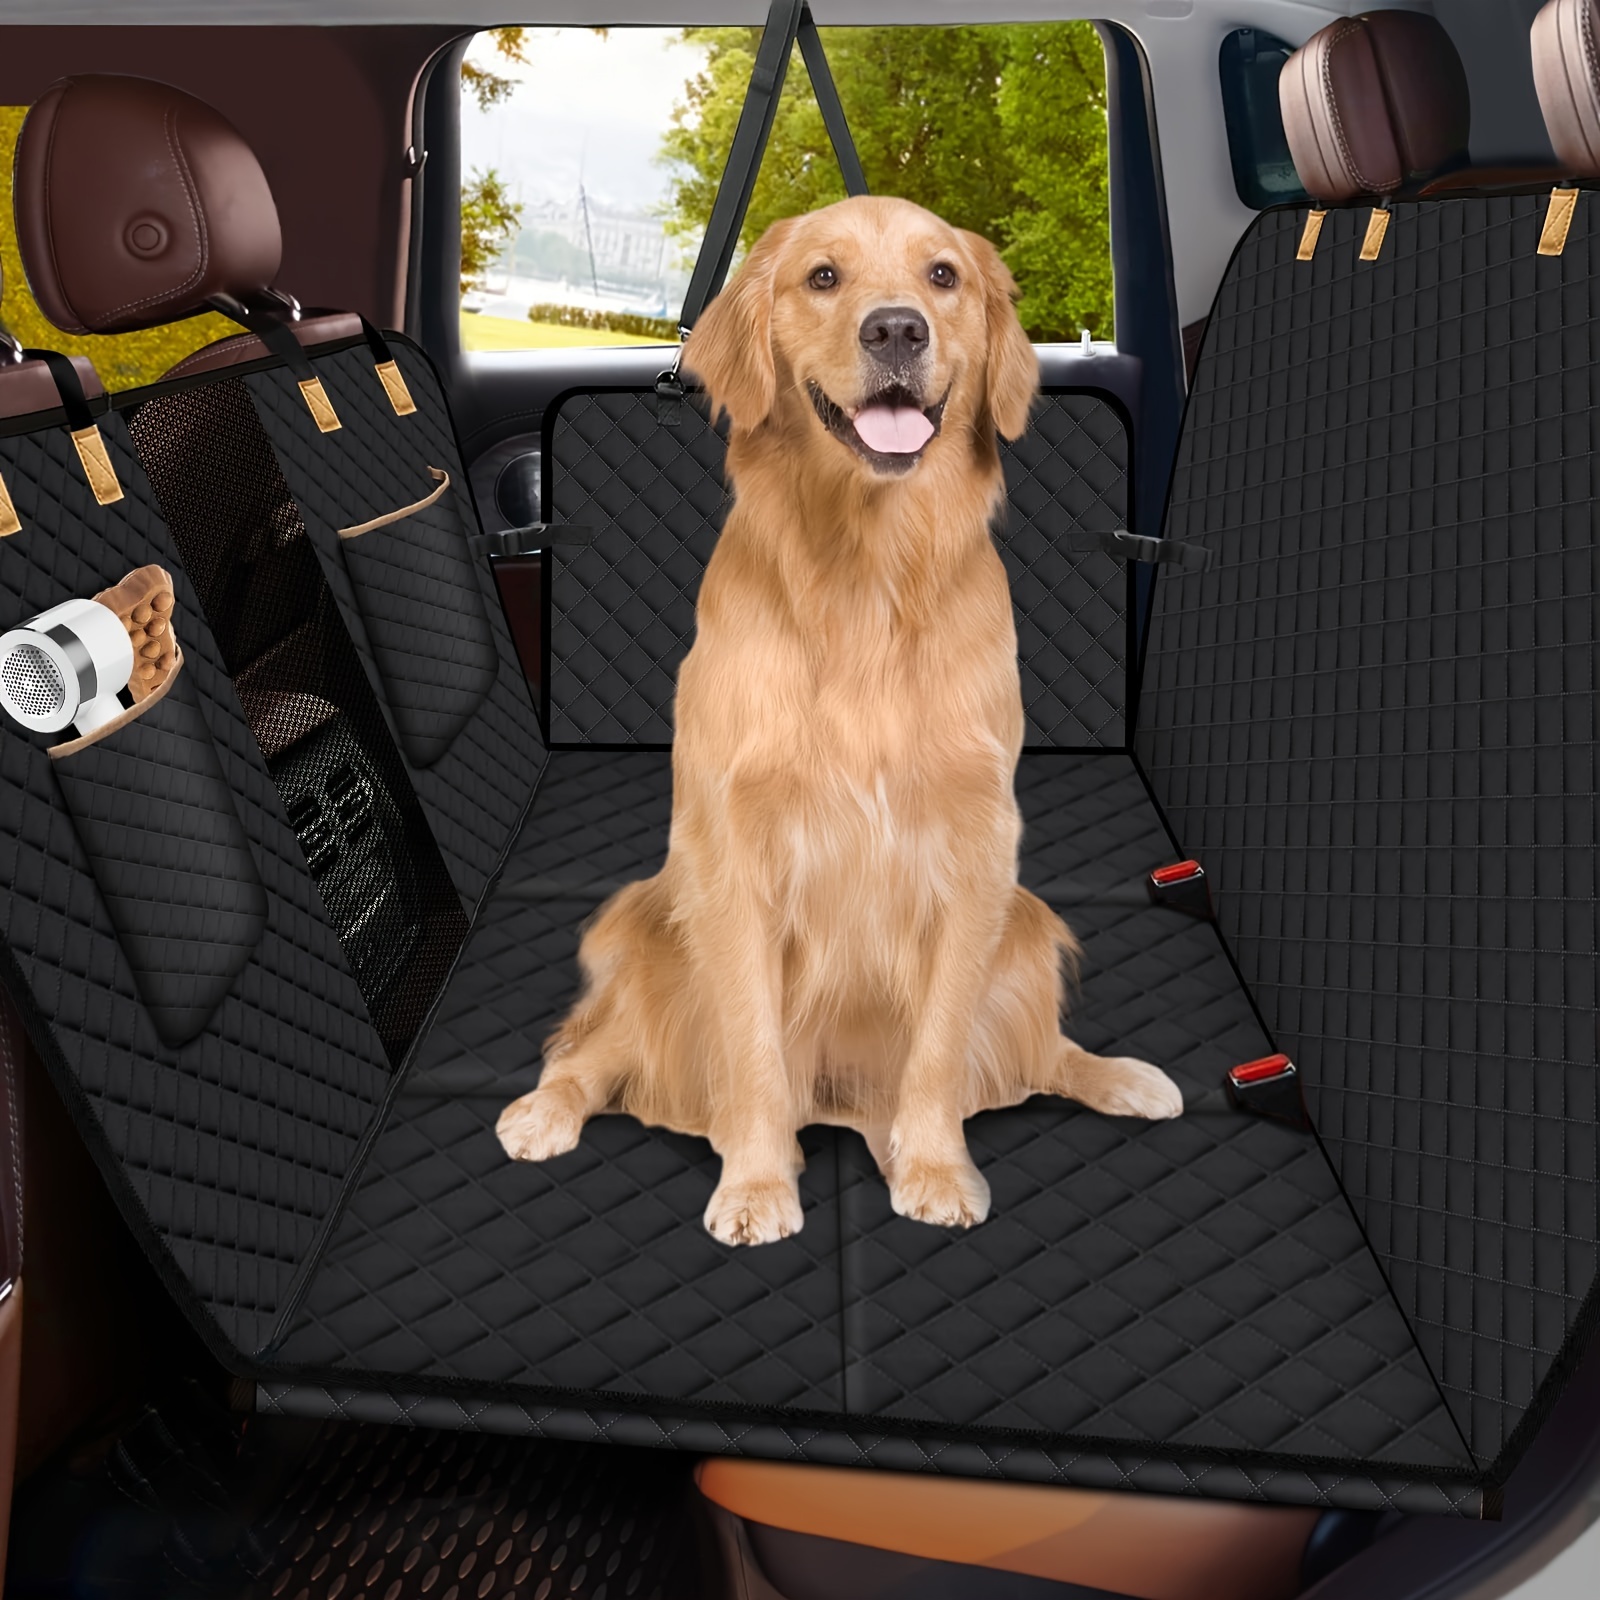 

Dog Car Seat Cover For Back Seat, Hard Bottom Dog Hammock For Car, Camping Air Mattress, Hammock Travel Bed For Car Suv Truck